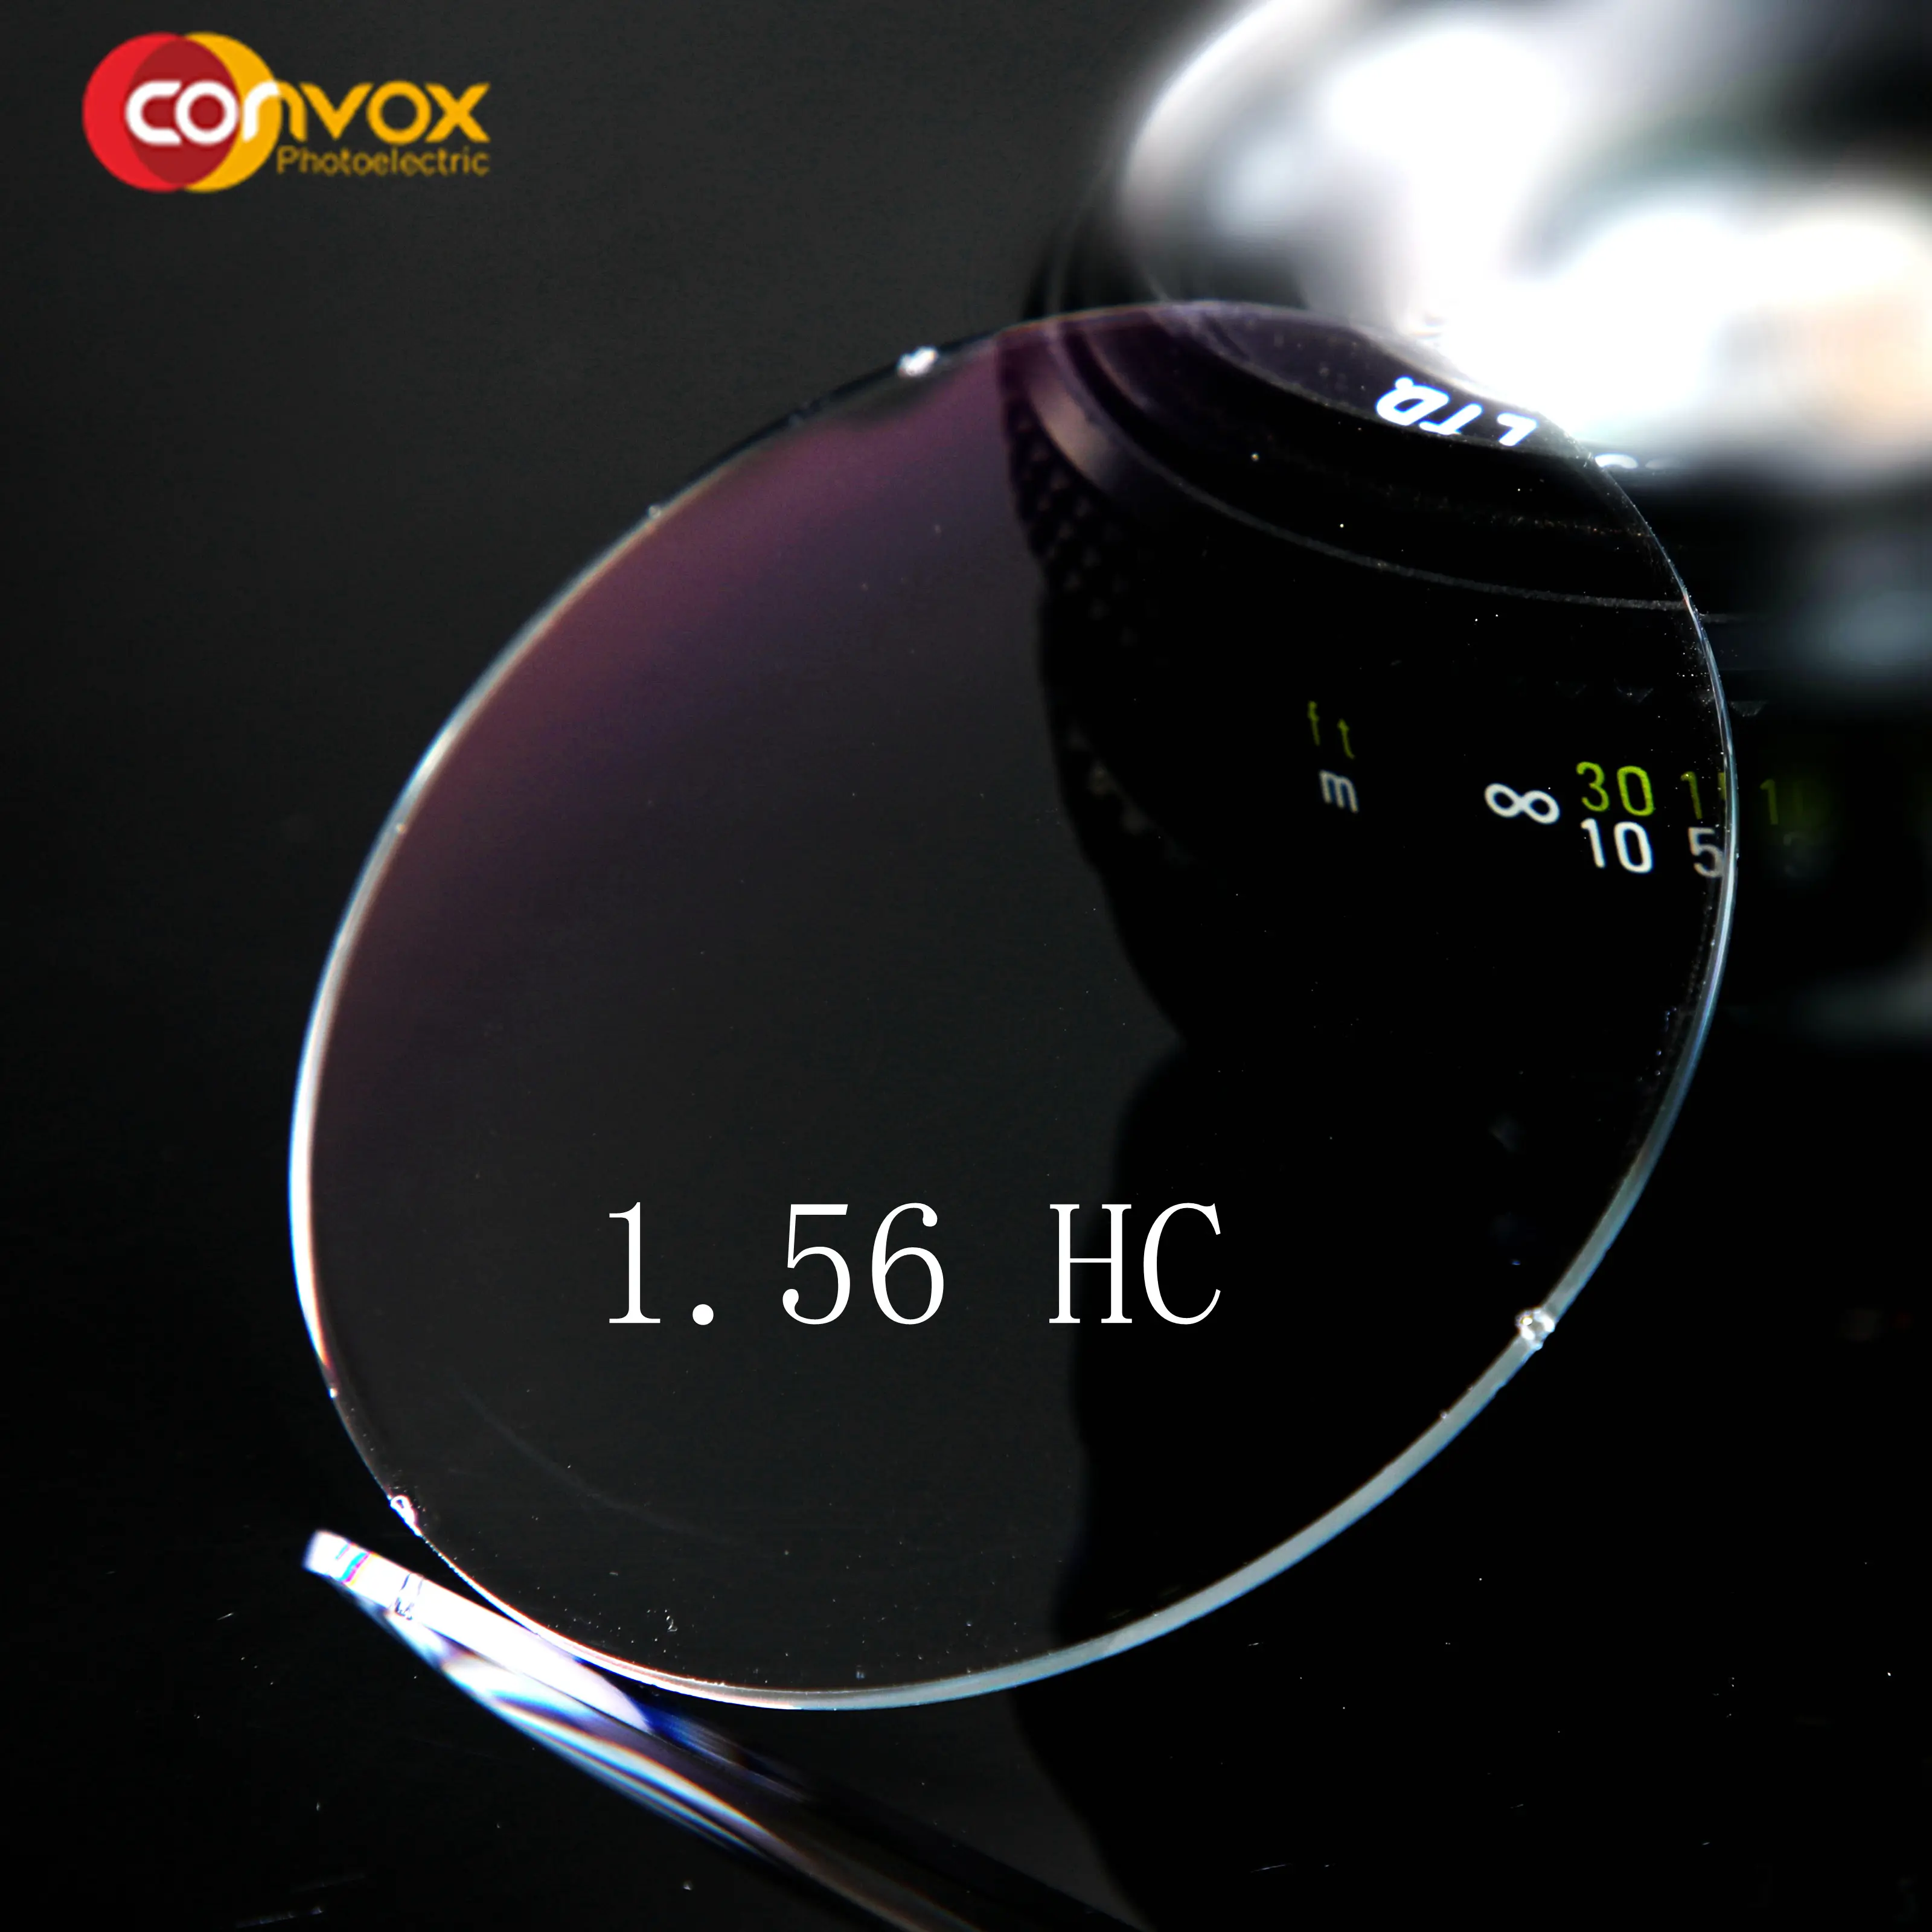 Convox classical cr hard coat 1.56 hc optical lens